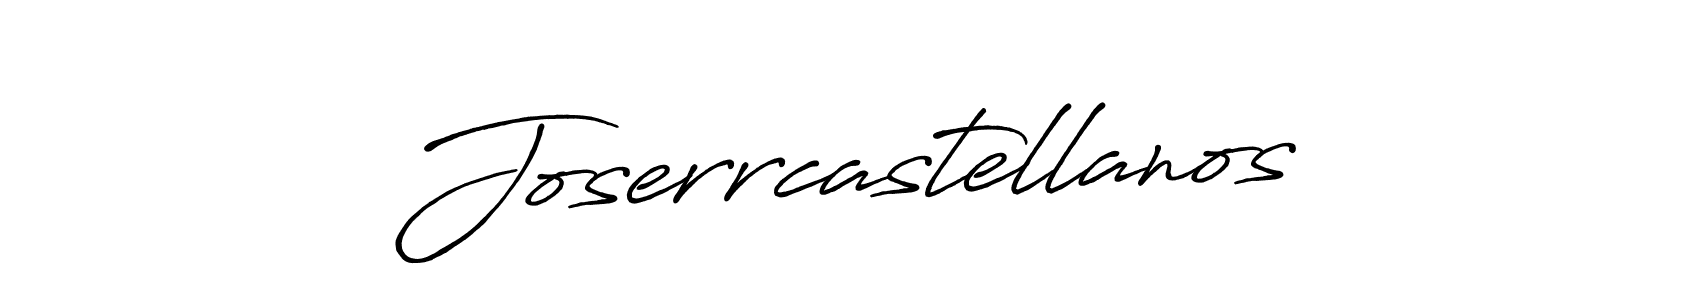 How to Draw Joserrcastellanos signature style? Antro_Vectra_Bolder is a latest design signature styles for name Joserrcastellanos. Joserrcastellanos signature style 7 images and pictures png